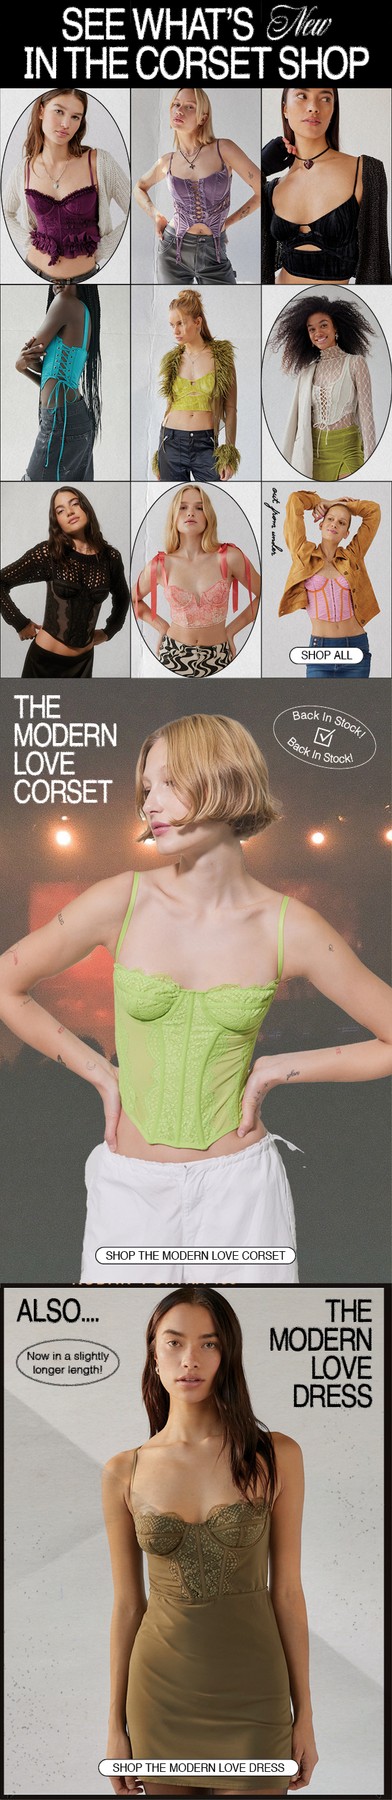 22-oct-wk2-w-corsets2.jpg